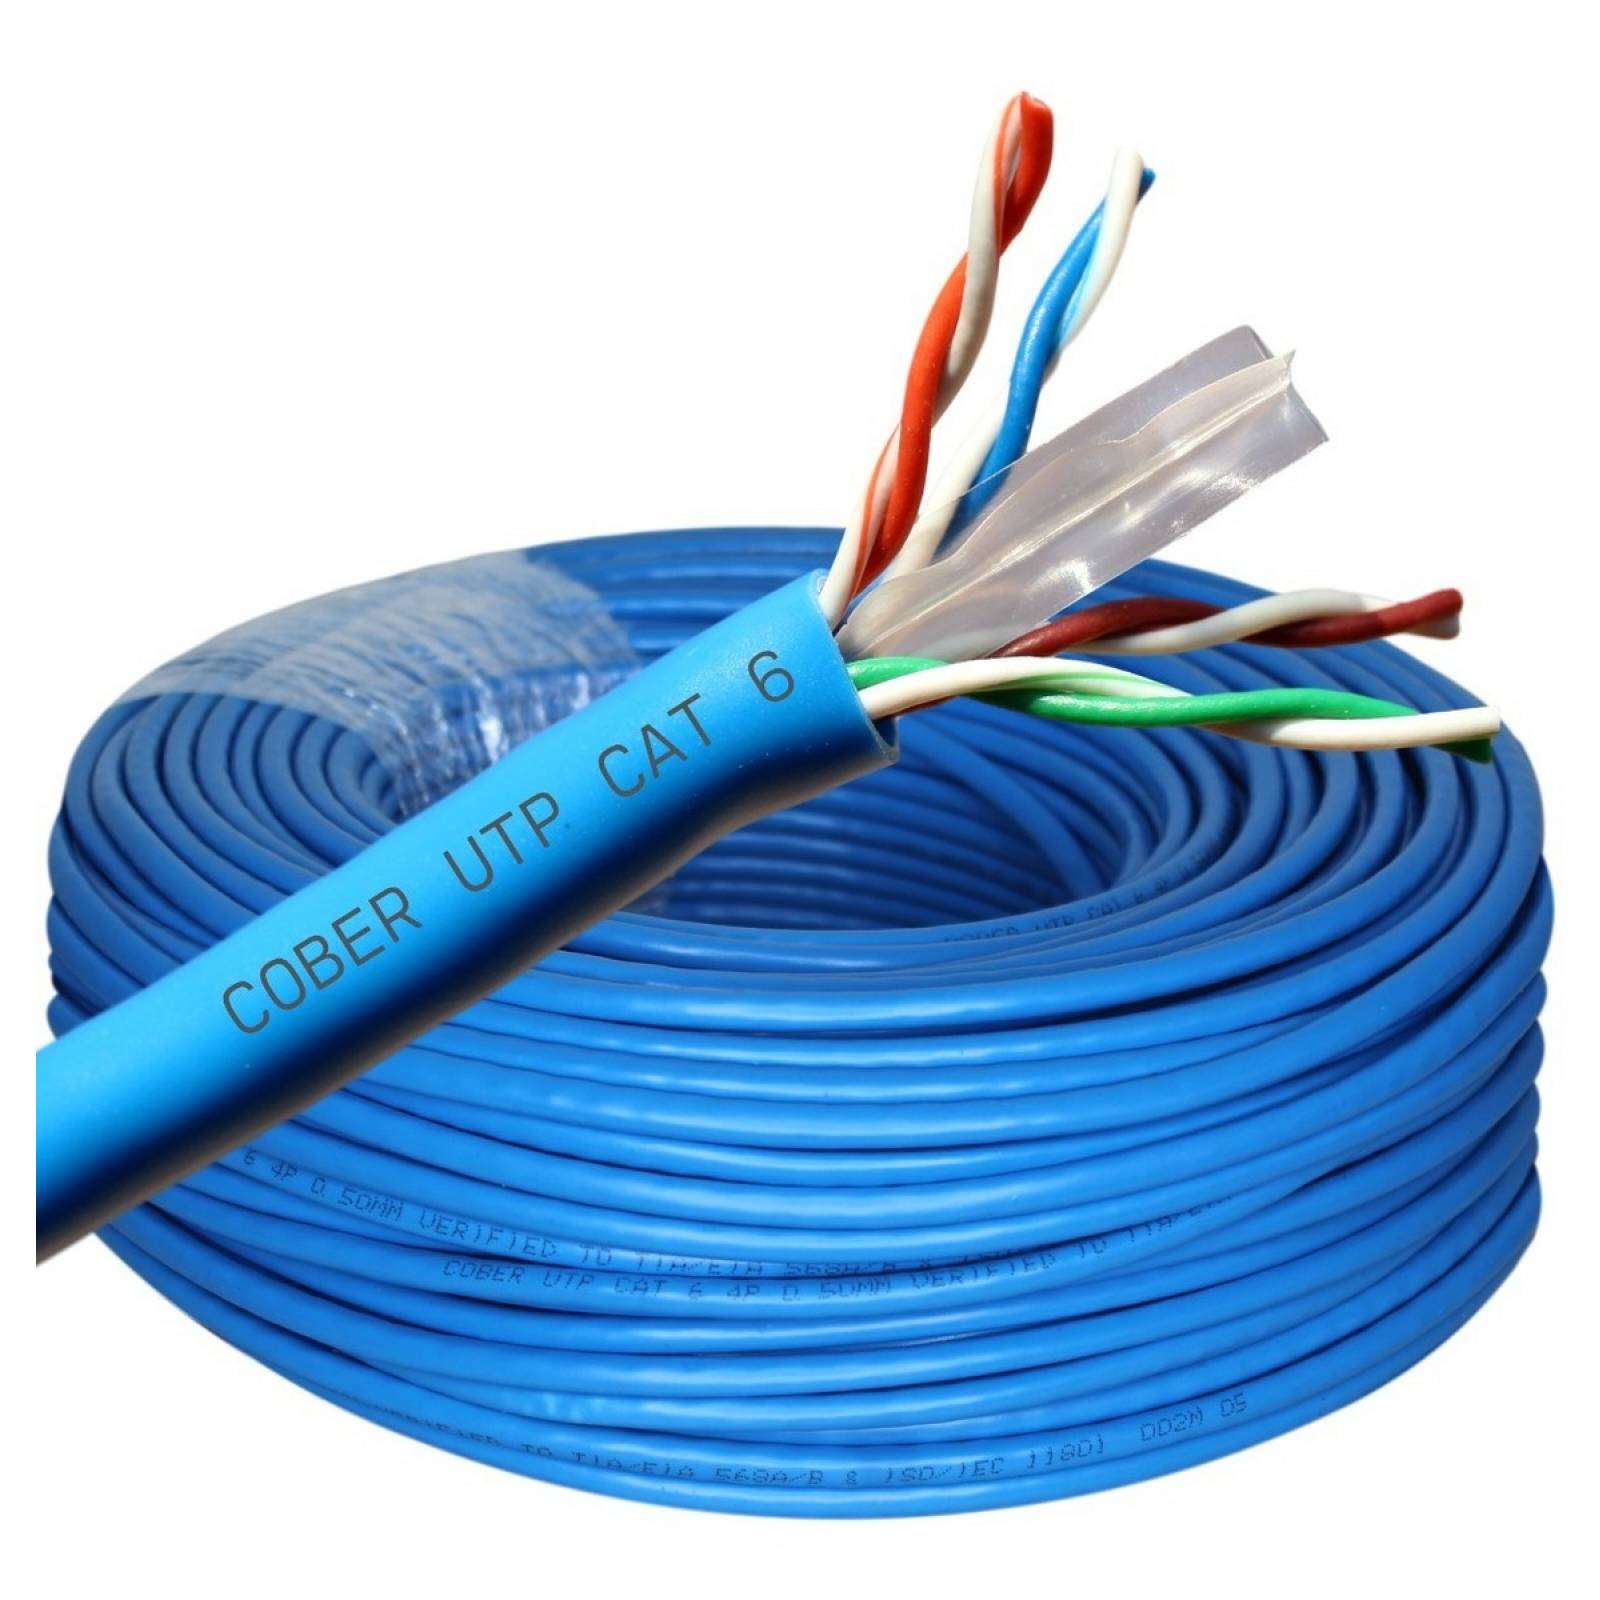 Cable De Red Para Internet Categoría 6 Utp 3 Metros Azul